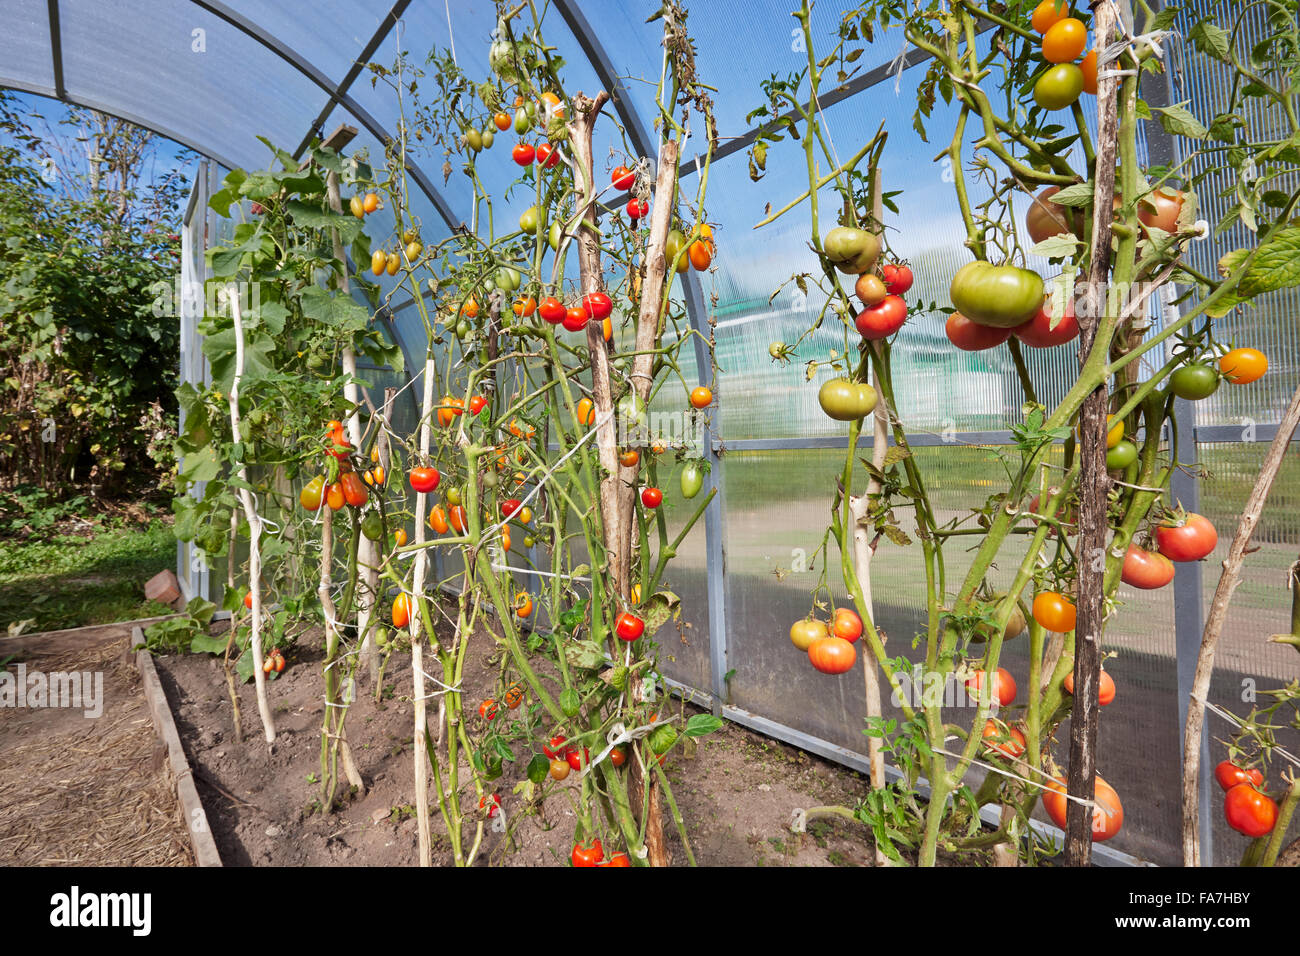 Tomatoes grow in organic greenhouse. Scientific name: Solanum lycopersicum. Kaluga region, Russia. Stock Photo